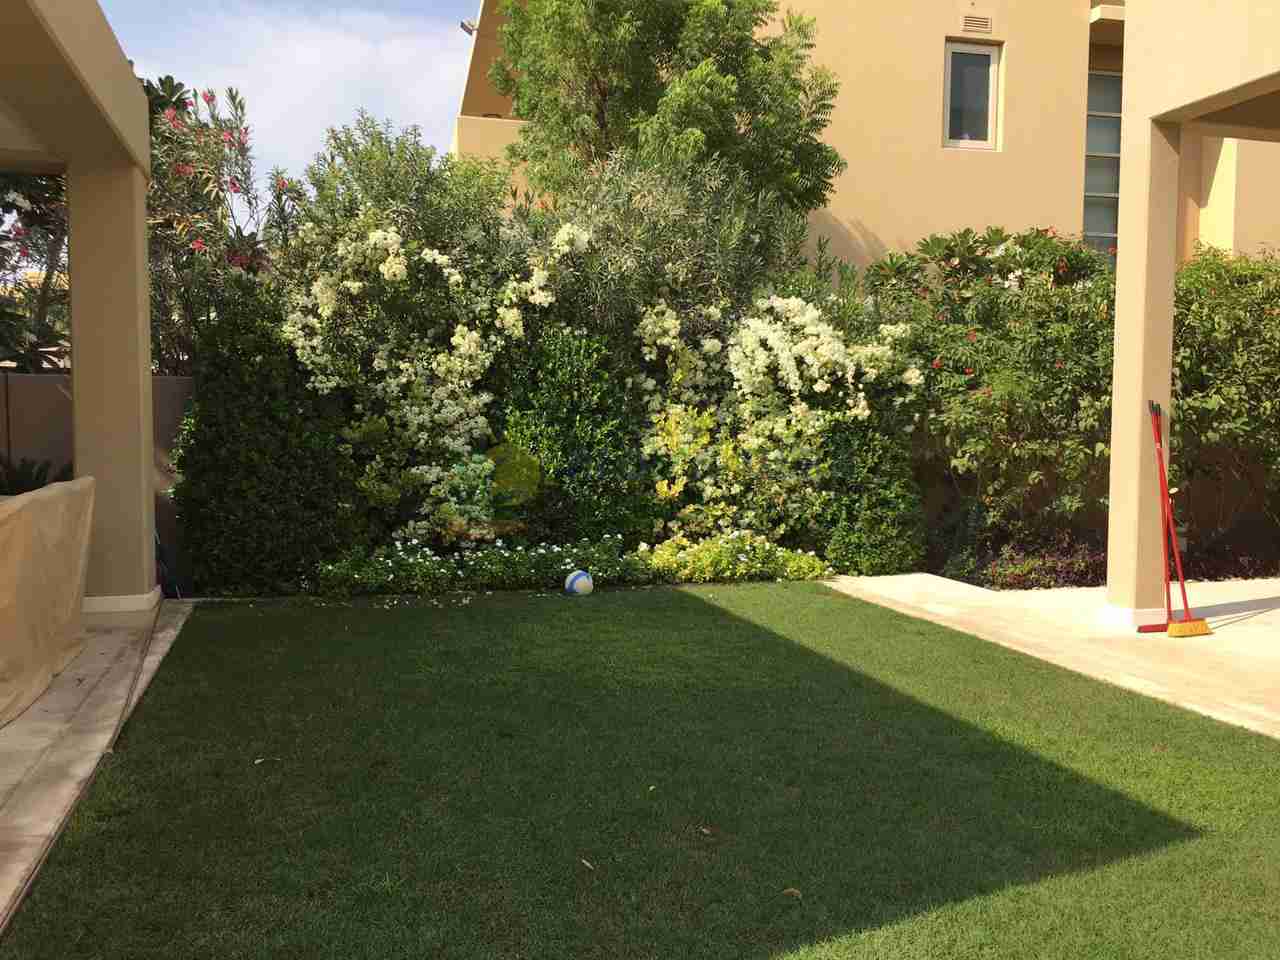 saheel-arabian-ranches-lawn-maintenance